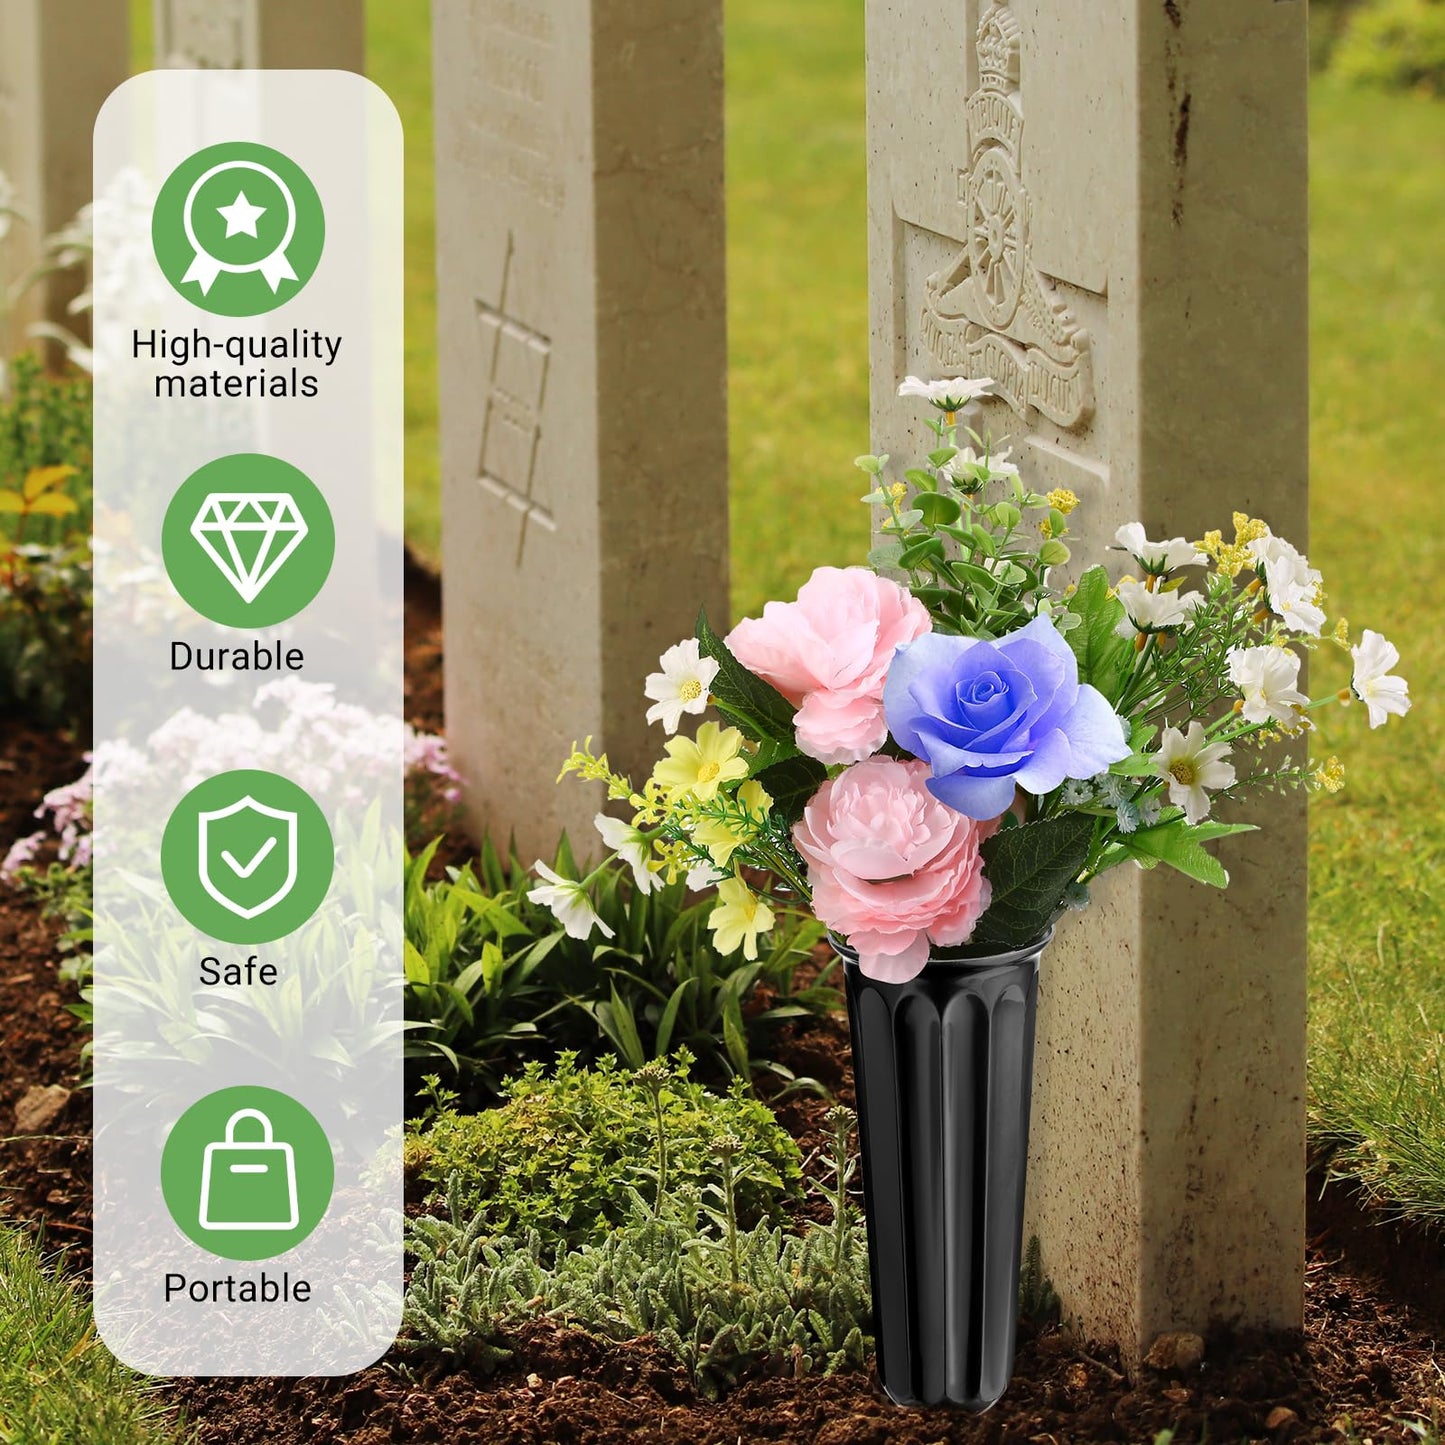 20 Pack Cemetery Vases with Spikes,Plastic Vases for Flowers,Grave Decorations for Cemetery,Grave Flower Holder,Memorial Floral Vases(Black)